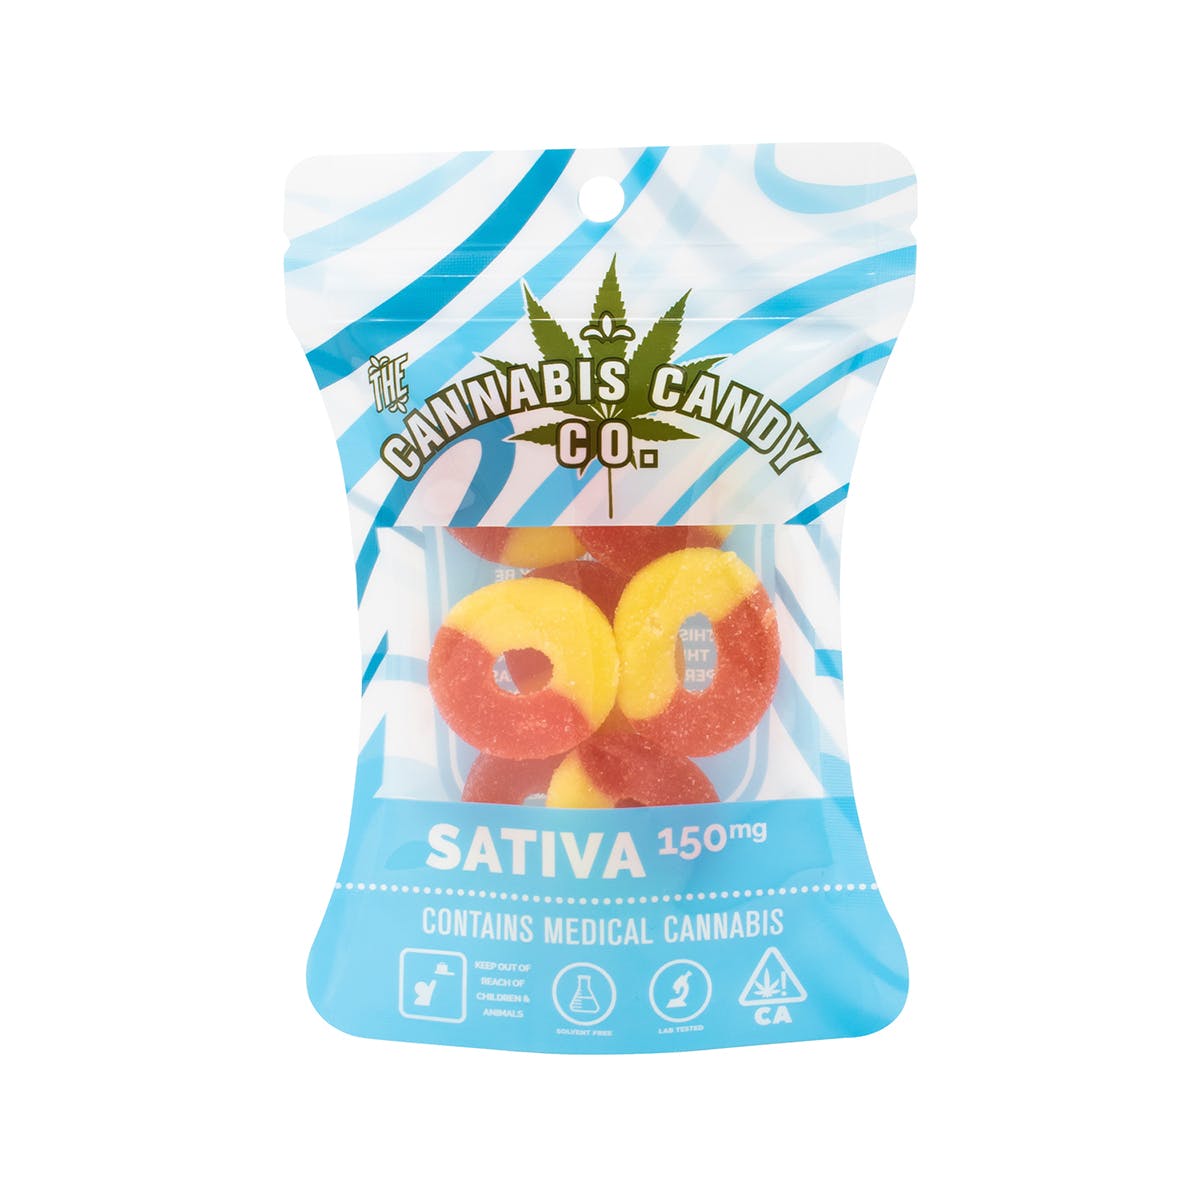 edible-the-cannabis-candy-co-rings-peach-150mg-sativa